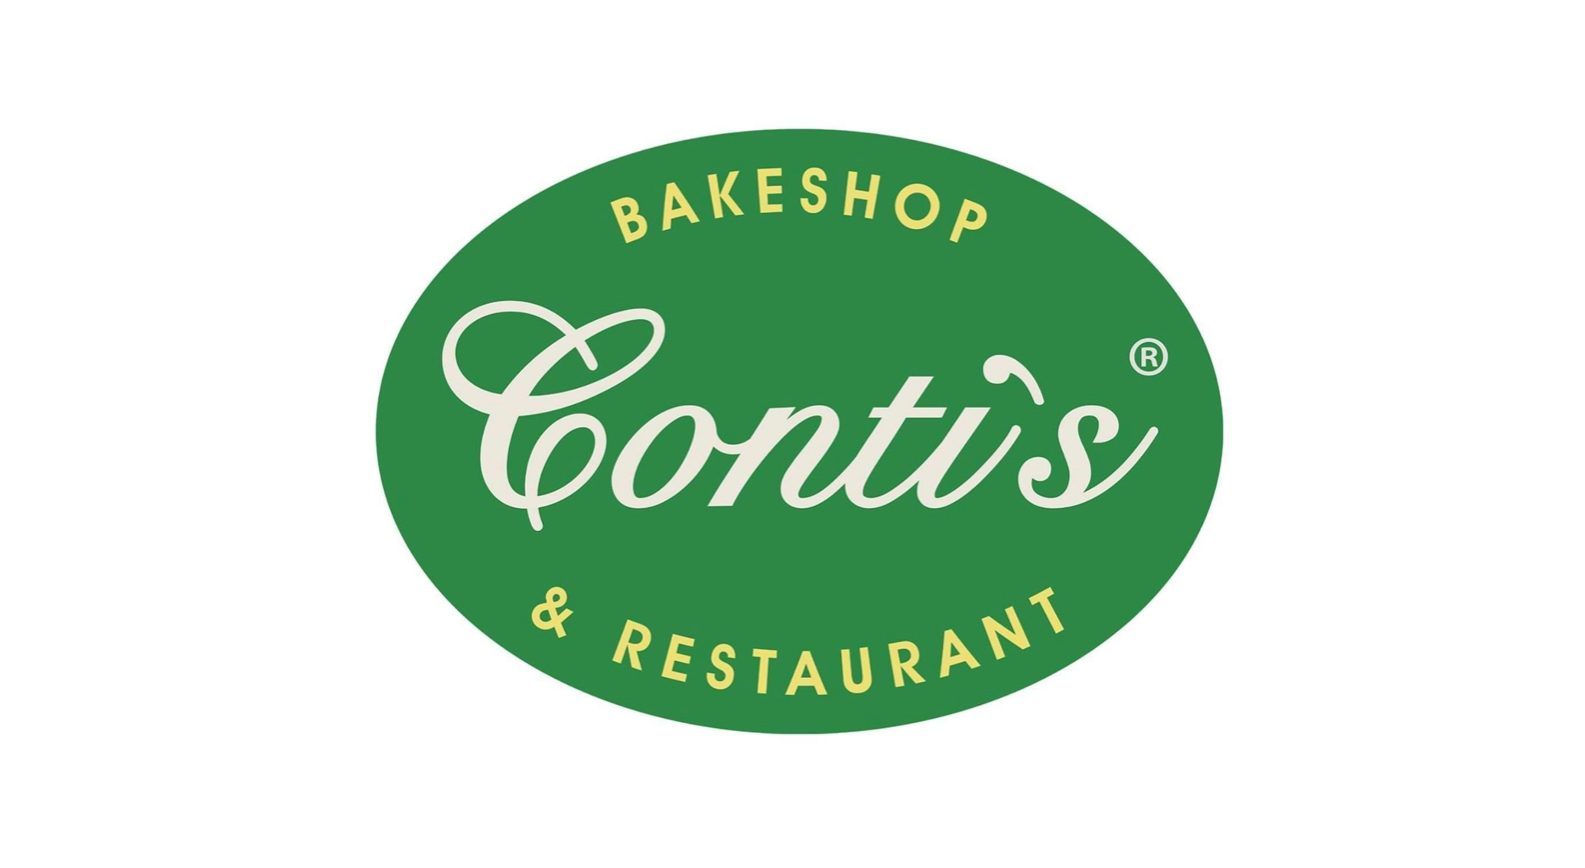 Conti’s Bakeshop & Restaurant